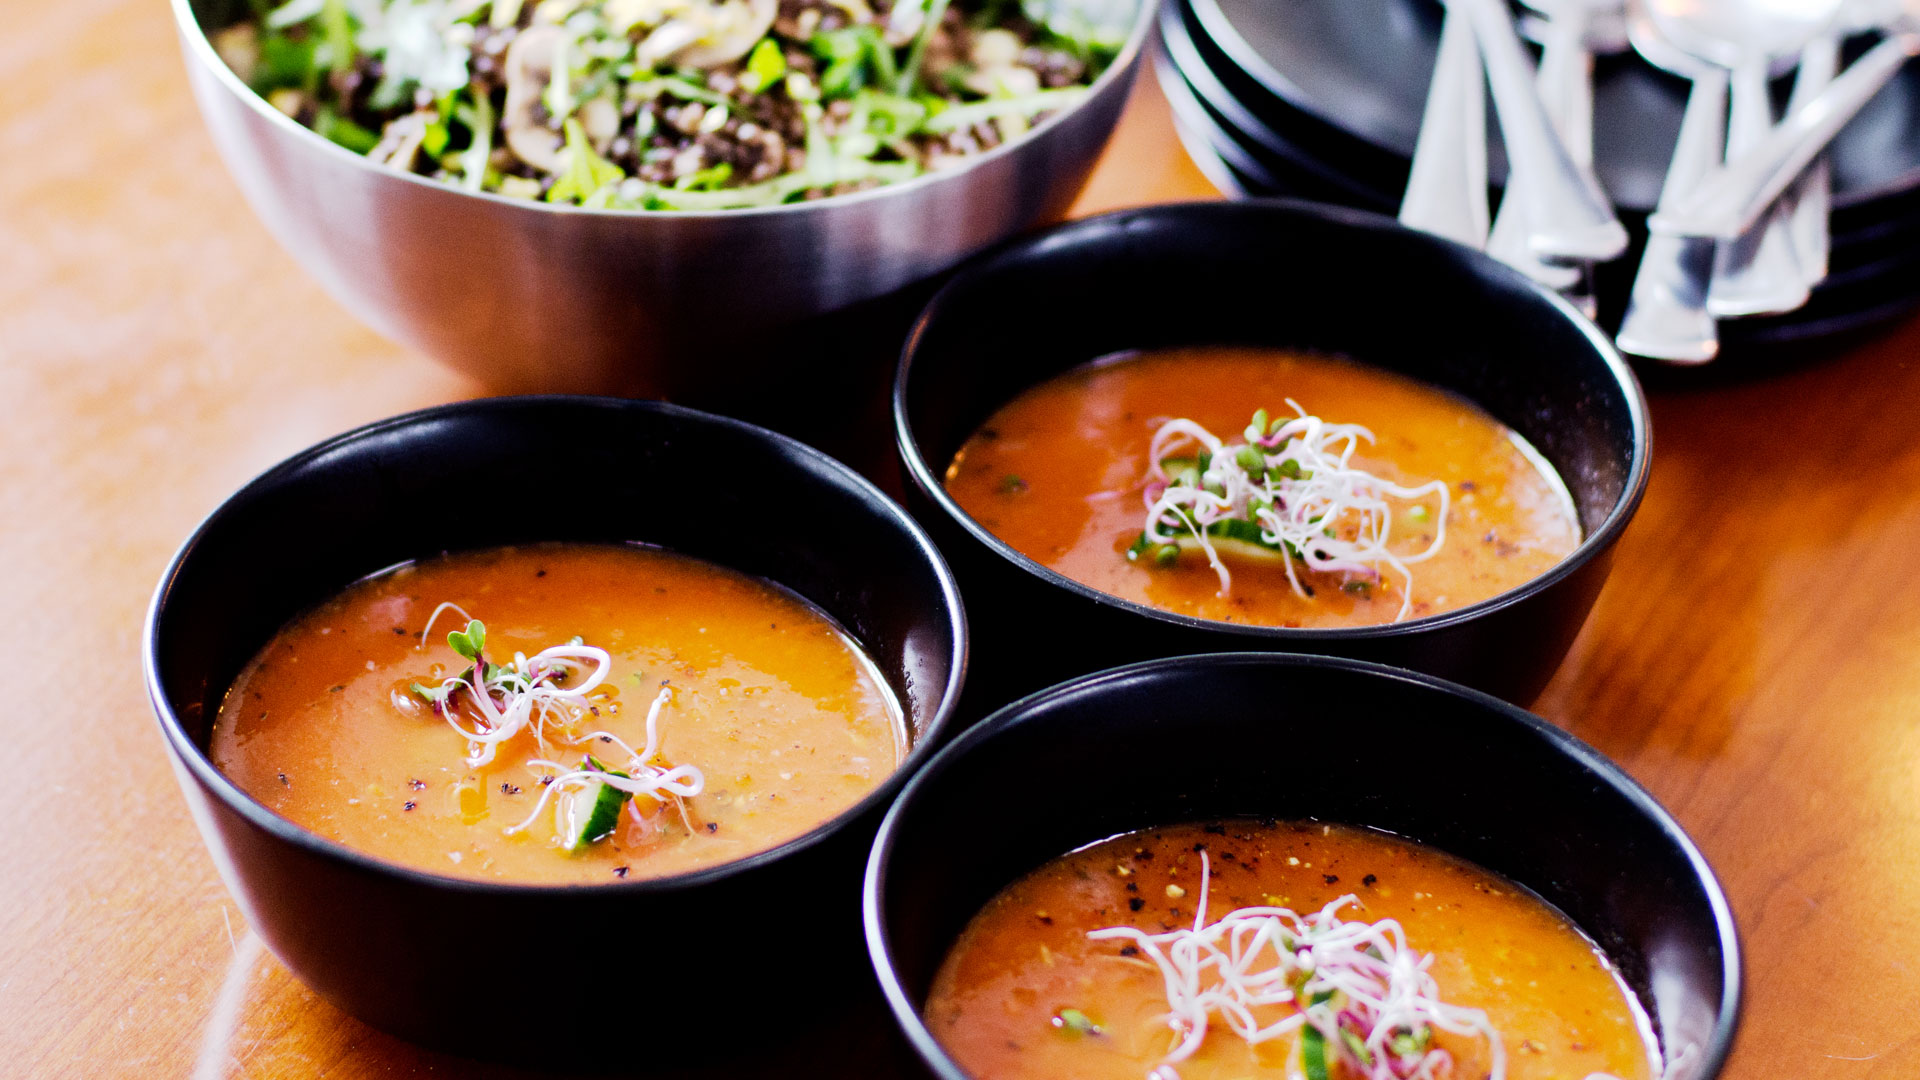 Nina's-delicous-healthy-vegan,-gluten-free-summer-Gazpacho-soup-recipe-in-bowls-Foodadit